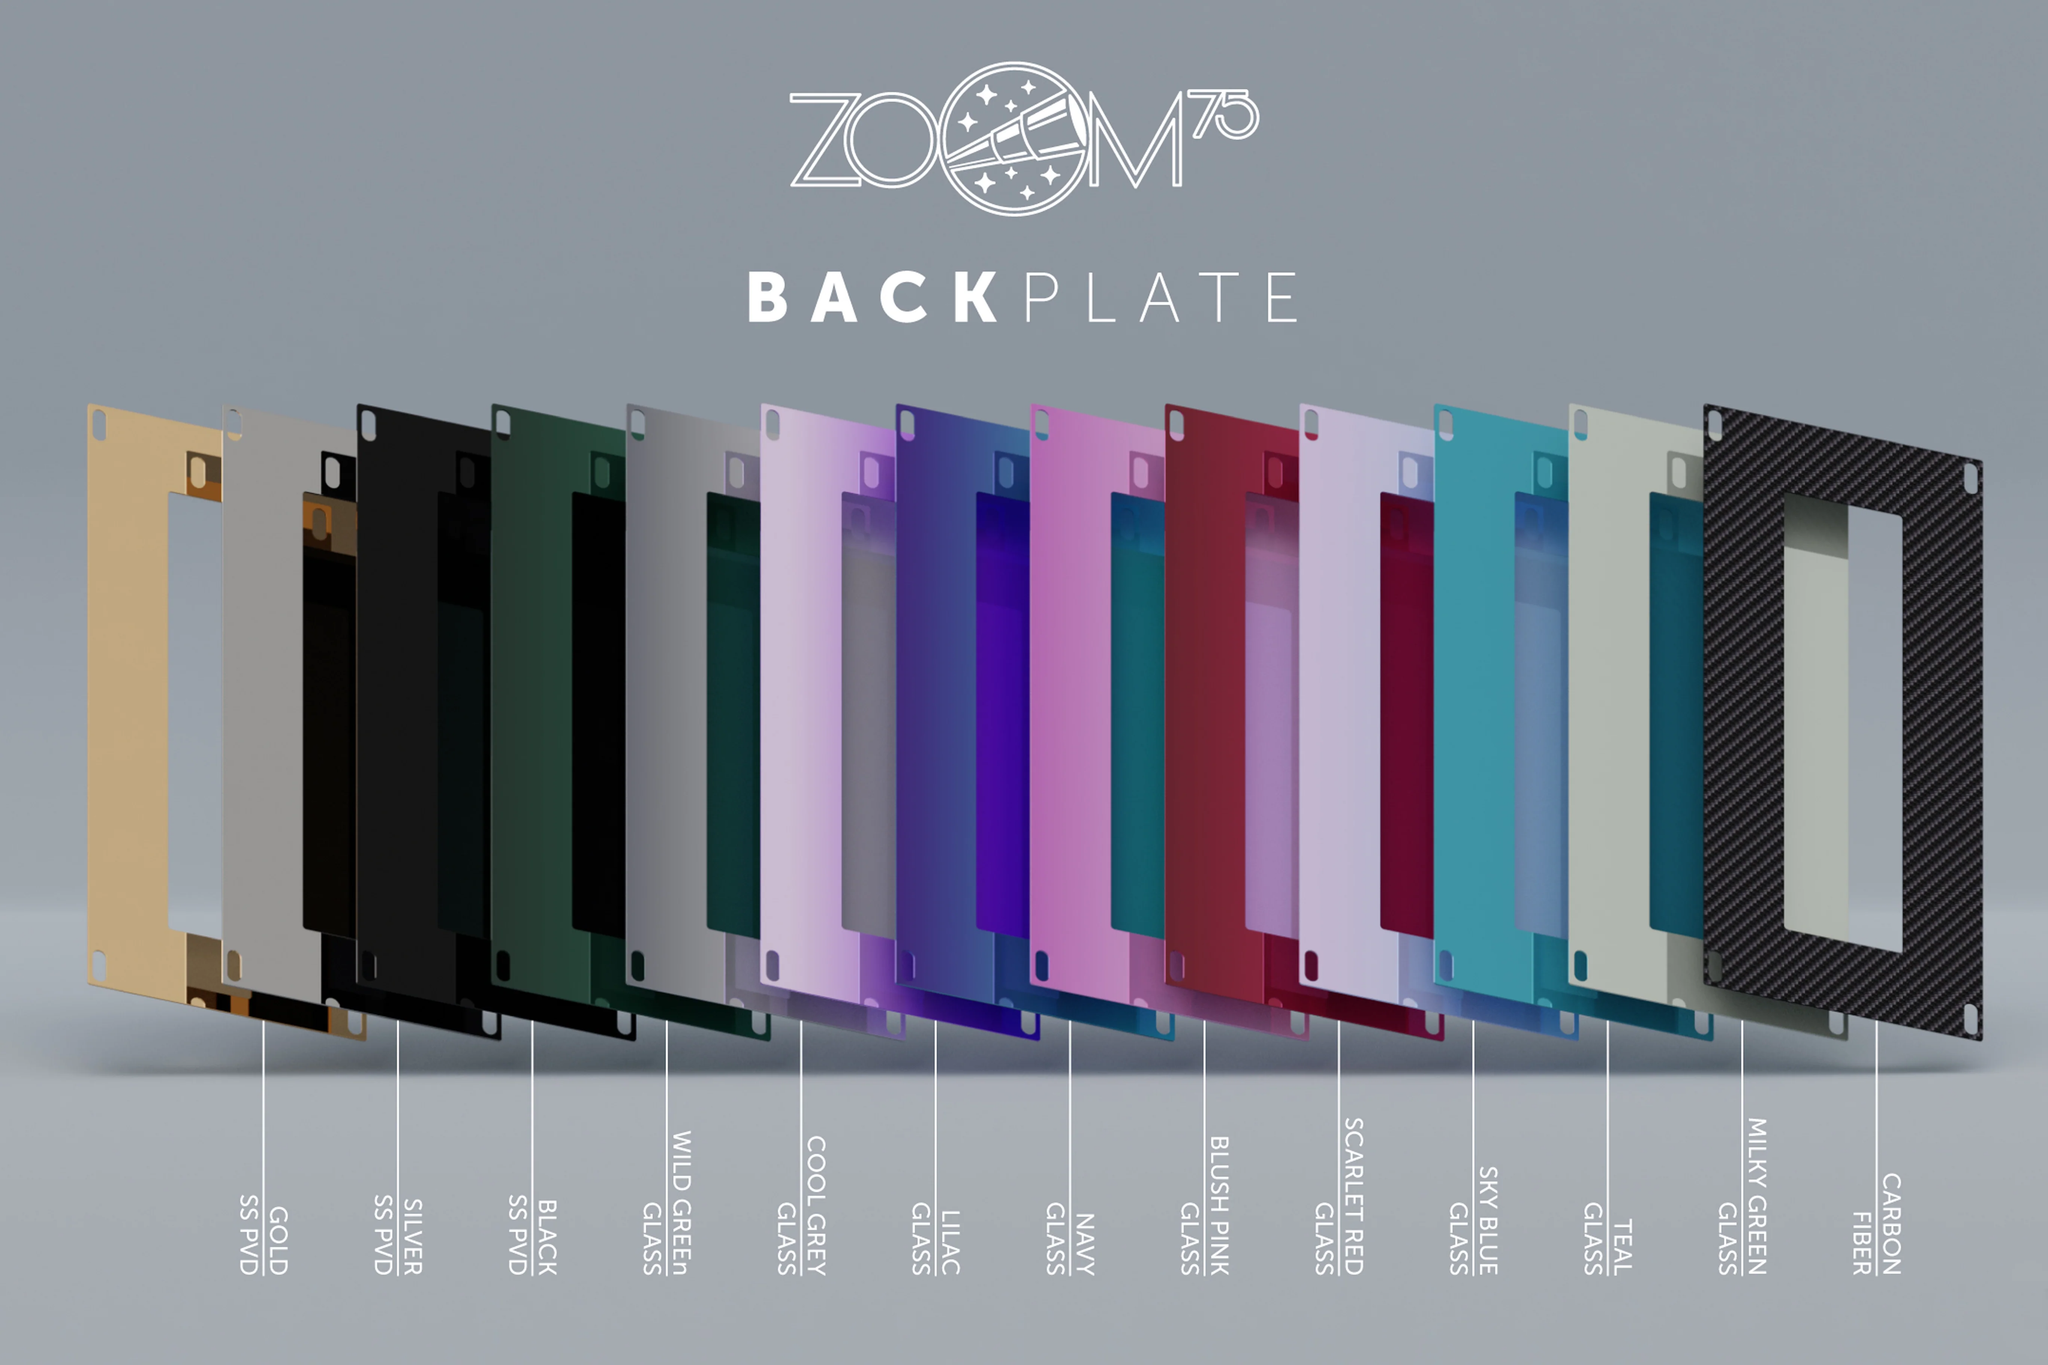 [Group-Buy] Meletrix Zoom75 - Extra Back Plate